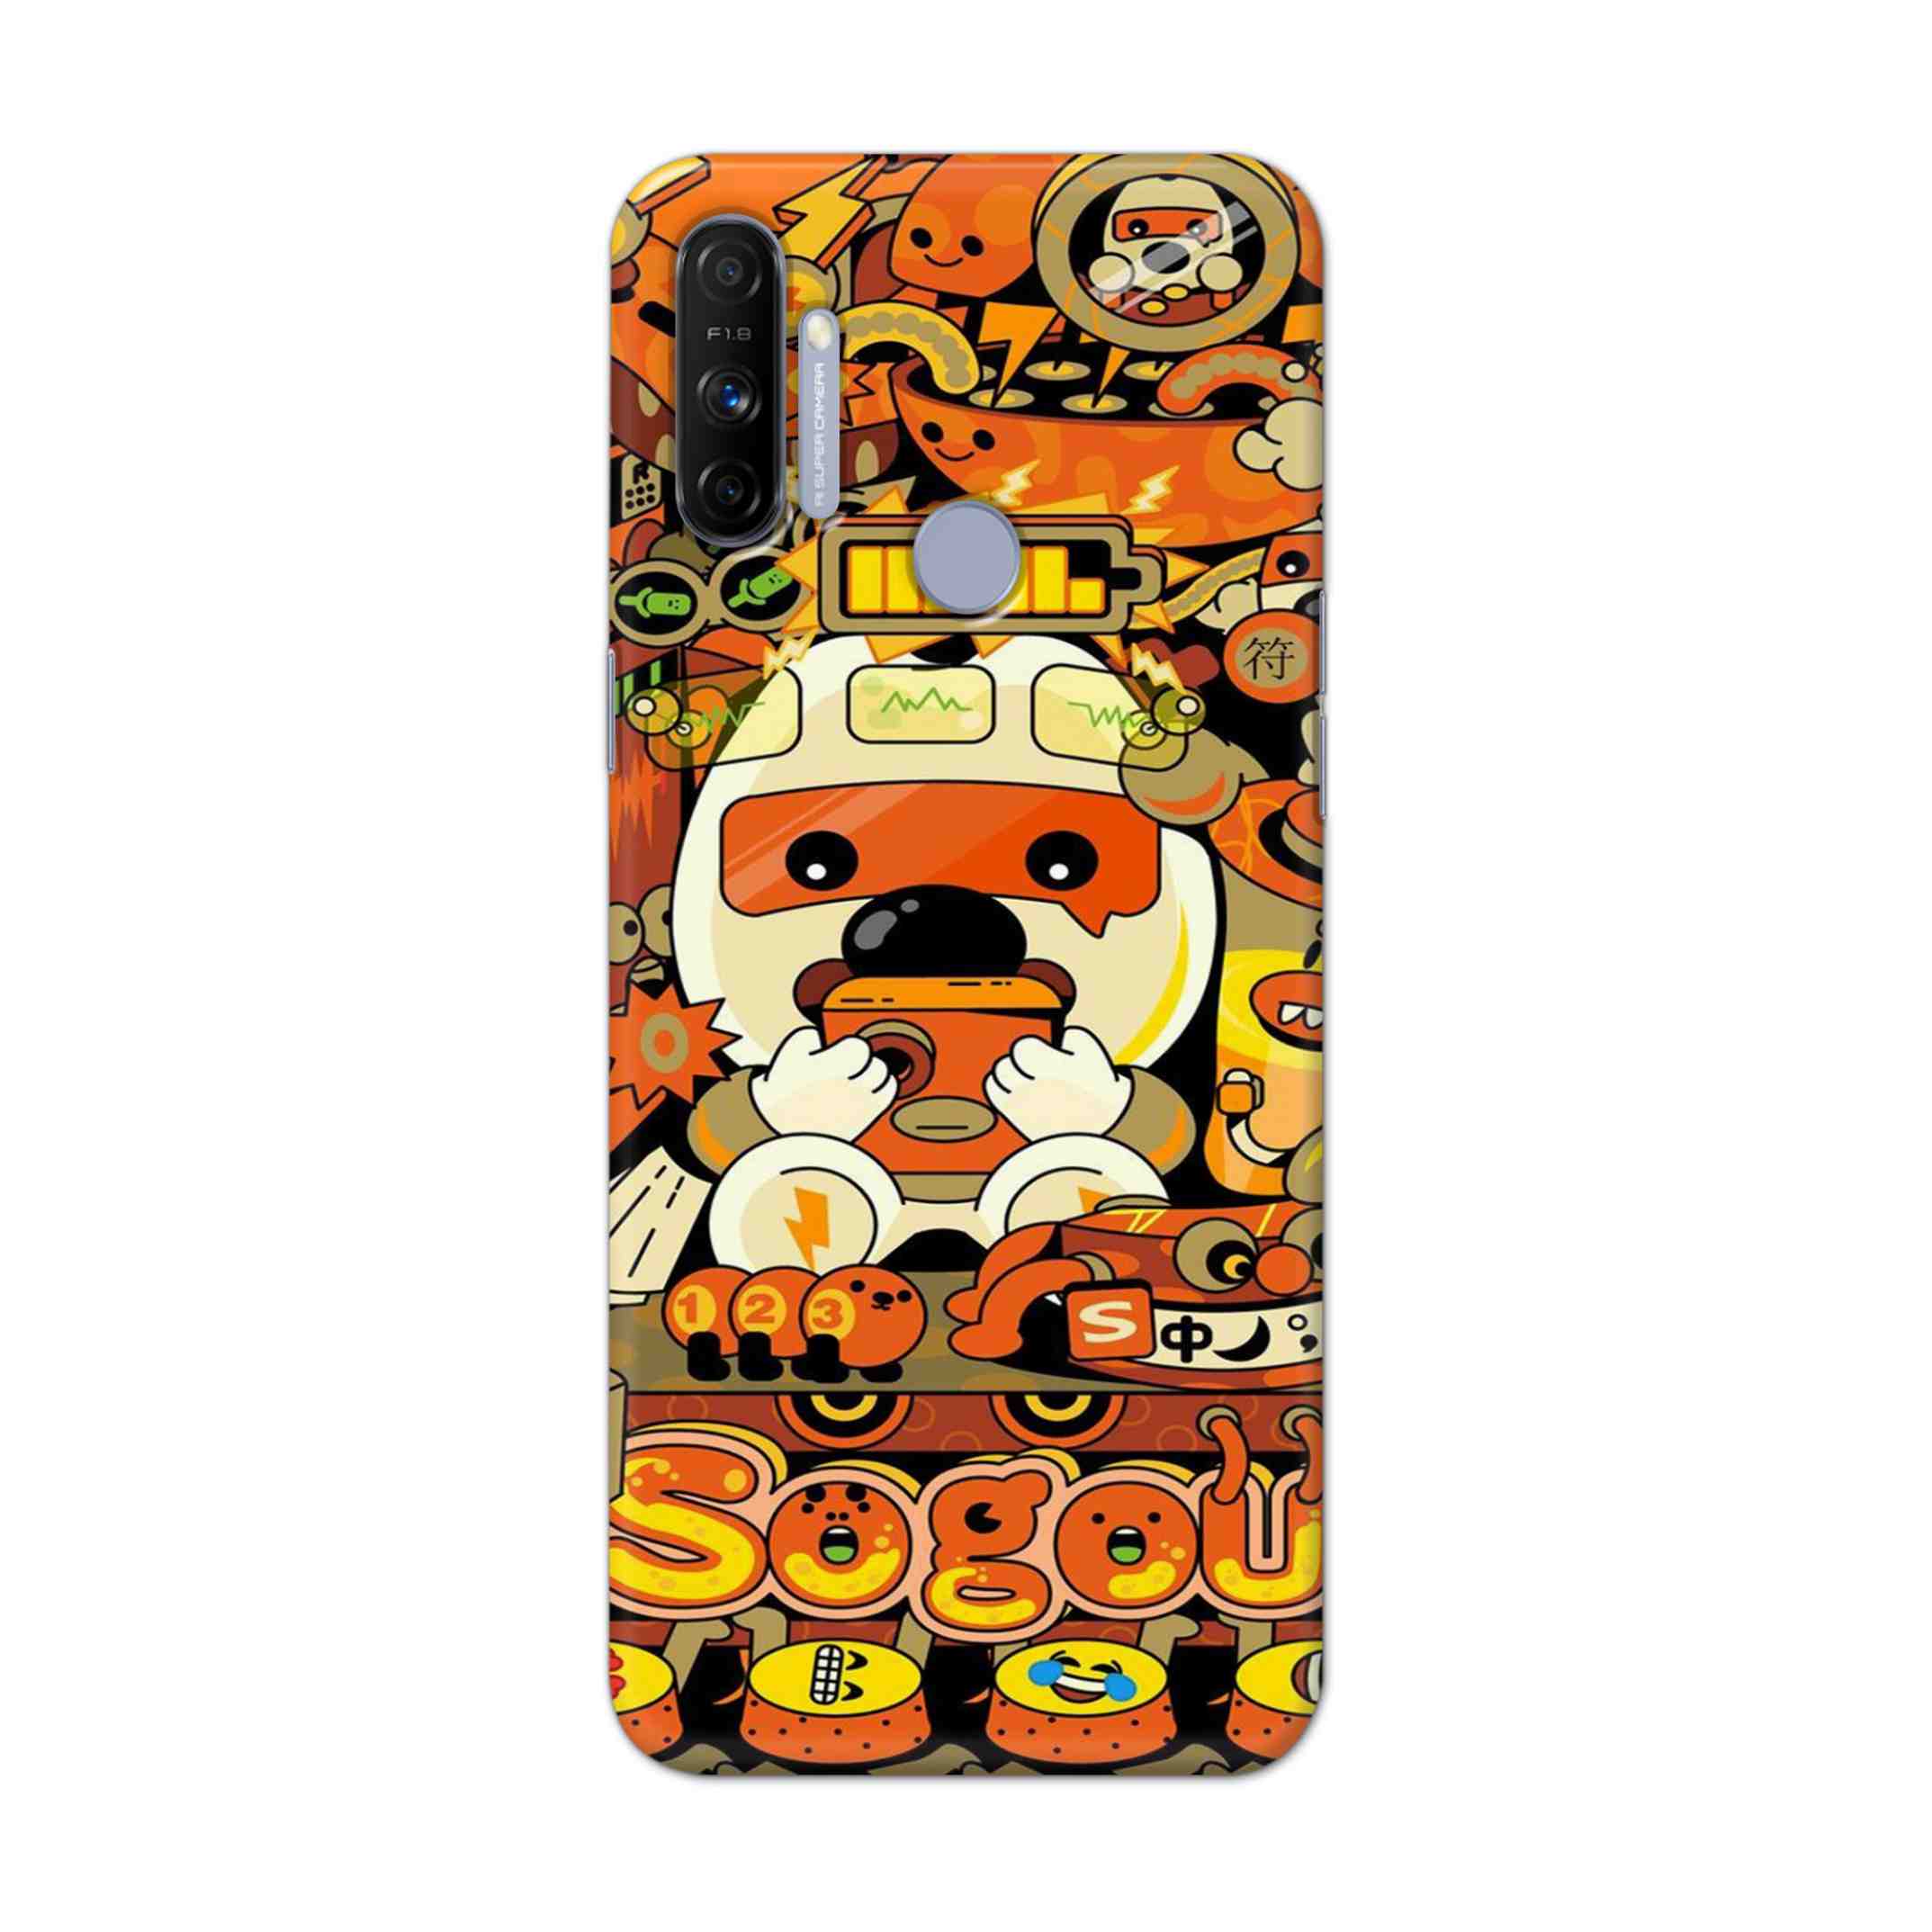 Buy Sogou Hard Back Mobile Phone Case Cover For Realme Narzo 20A Online